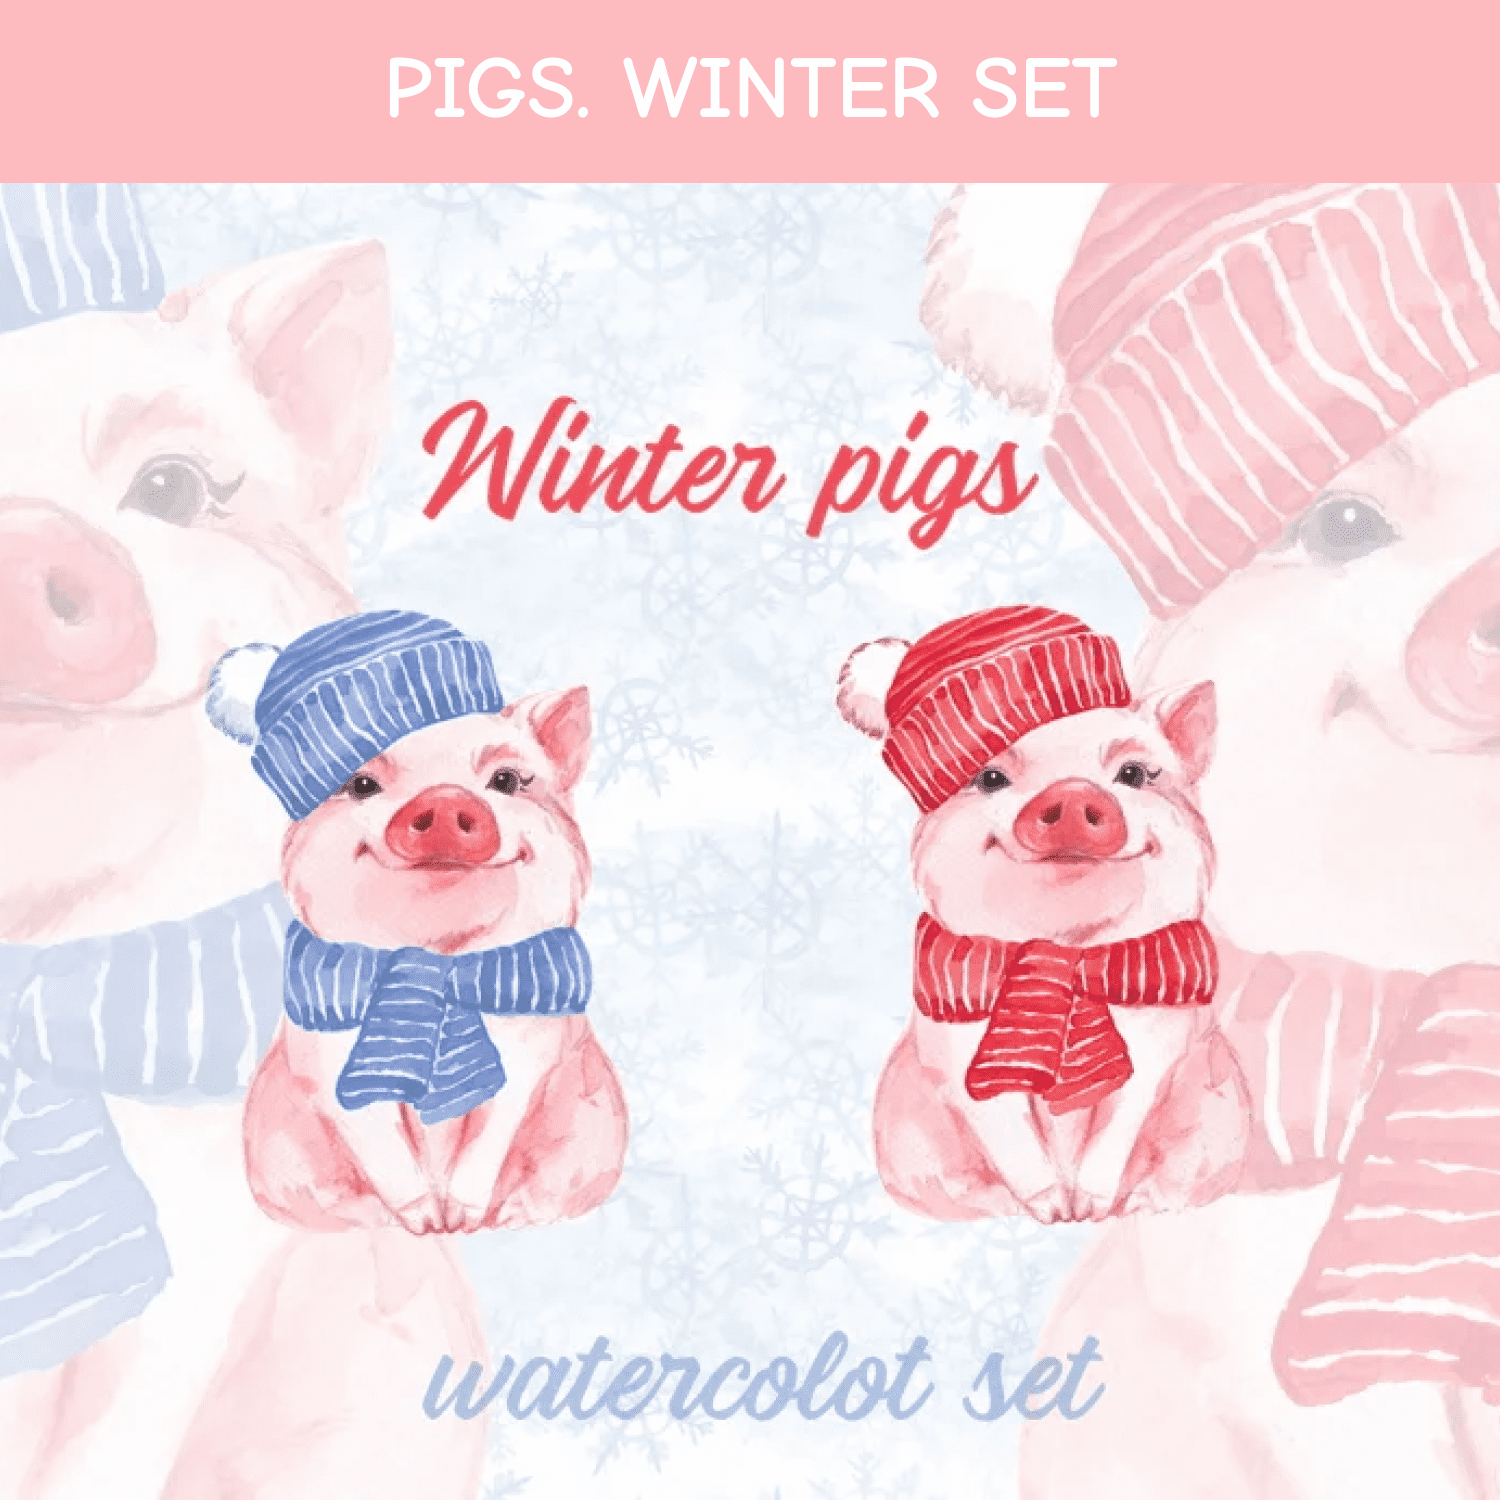 Pigs. Winter set.